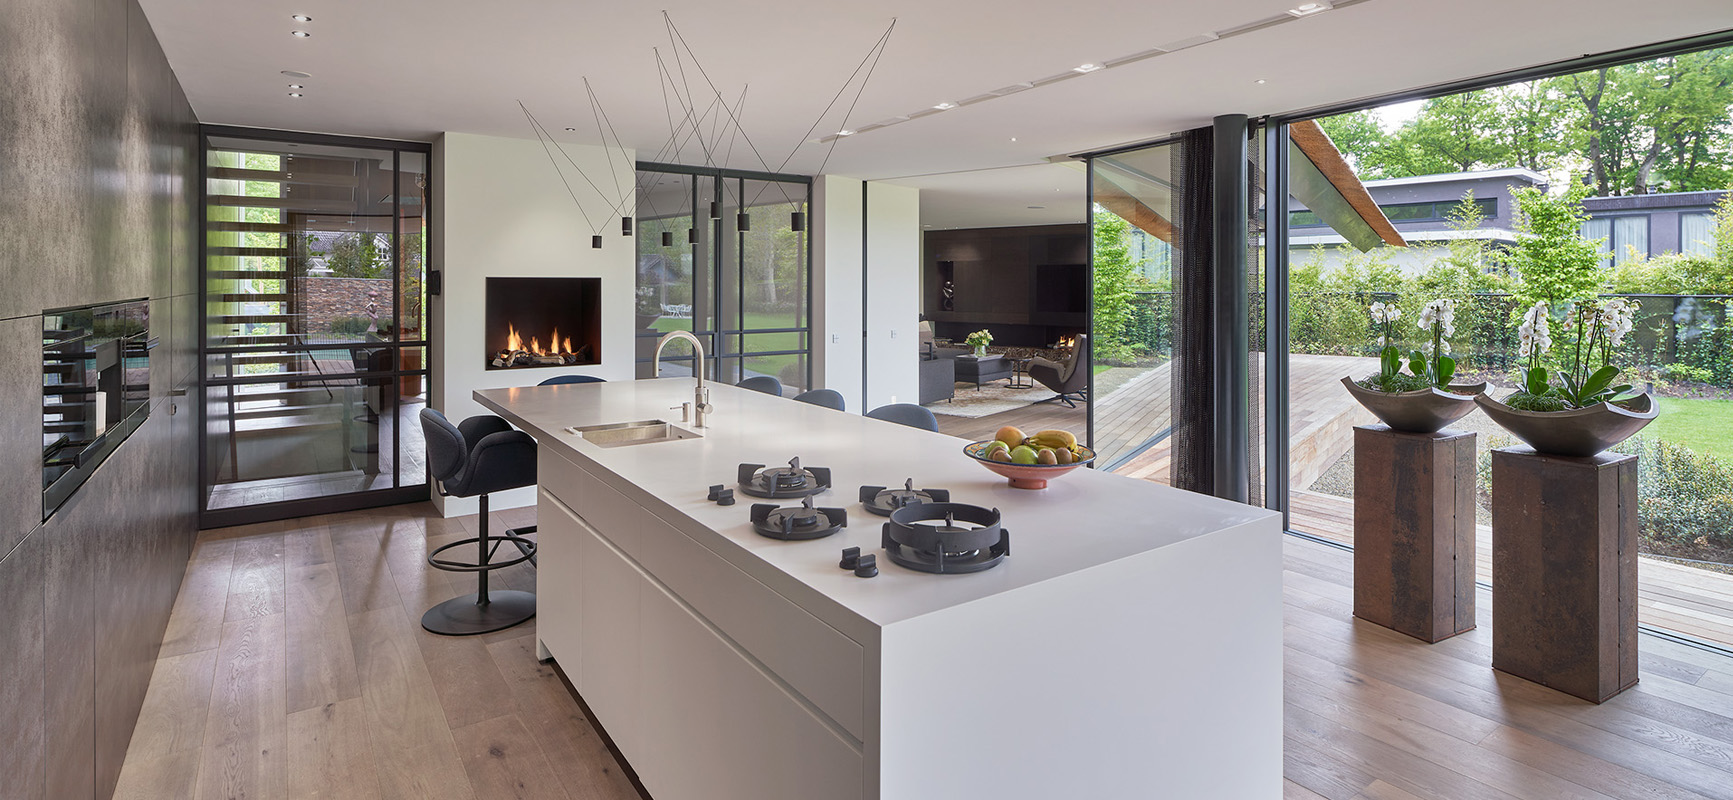 Villa custom interior | Eindhoven (NL) - Residential Interior Design